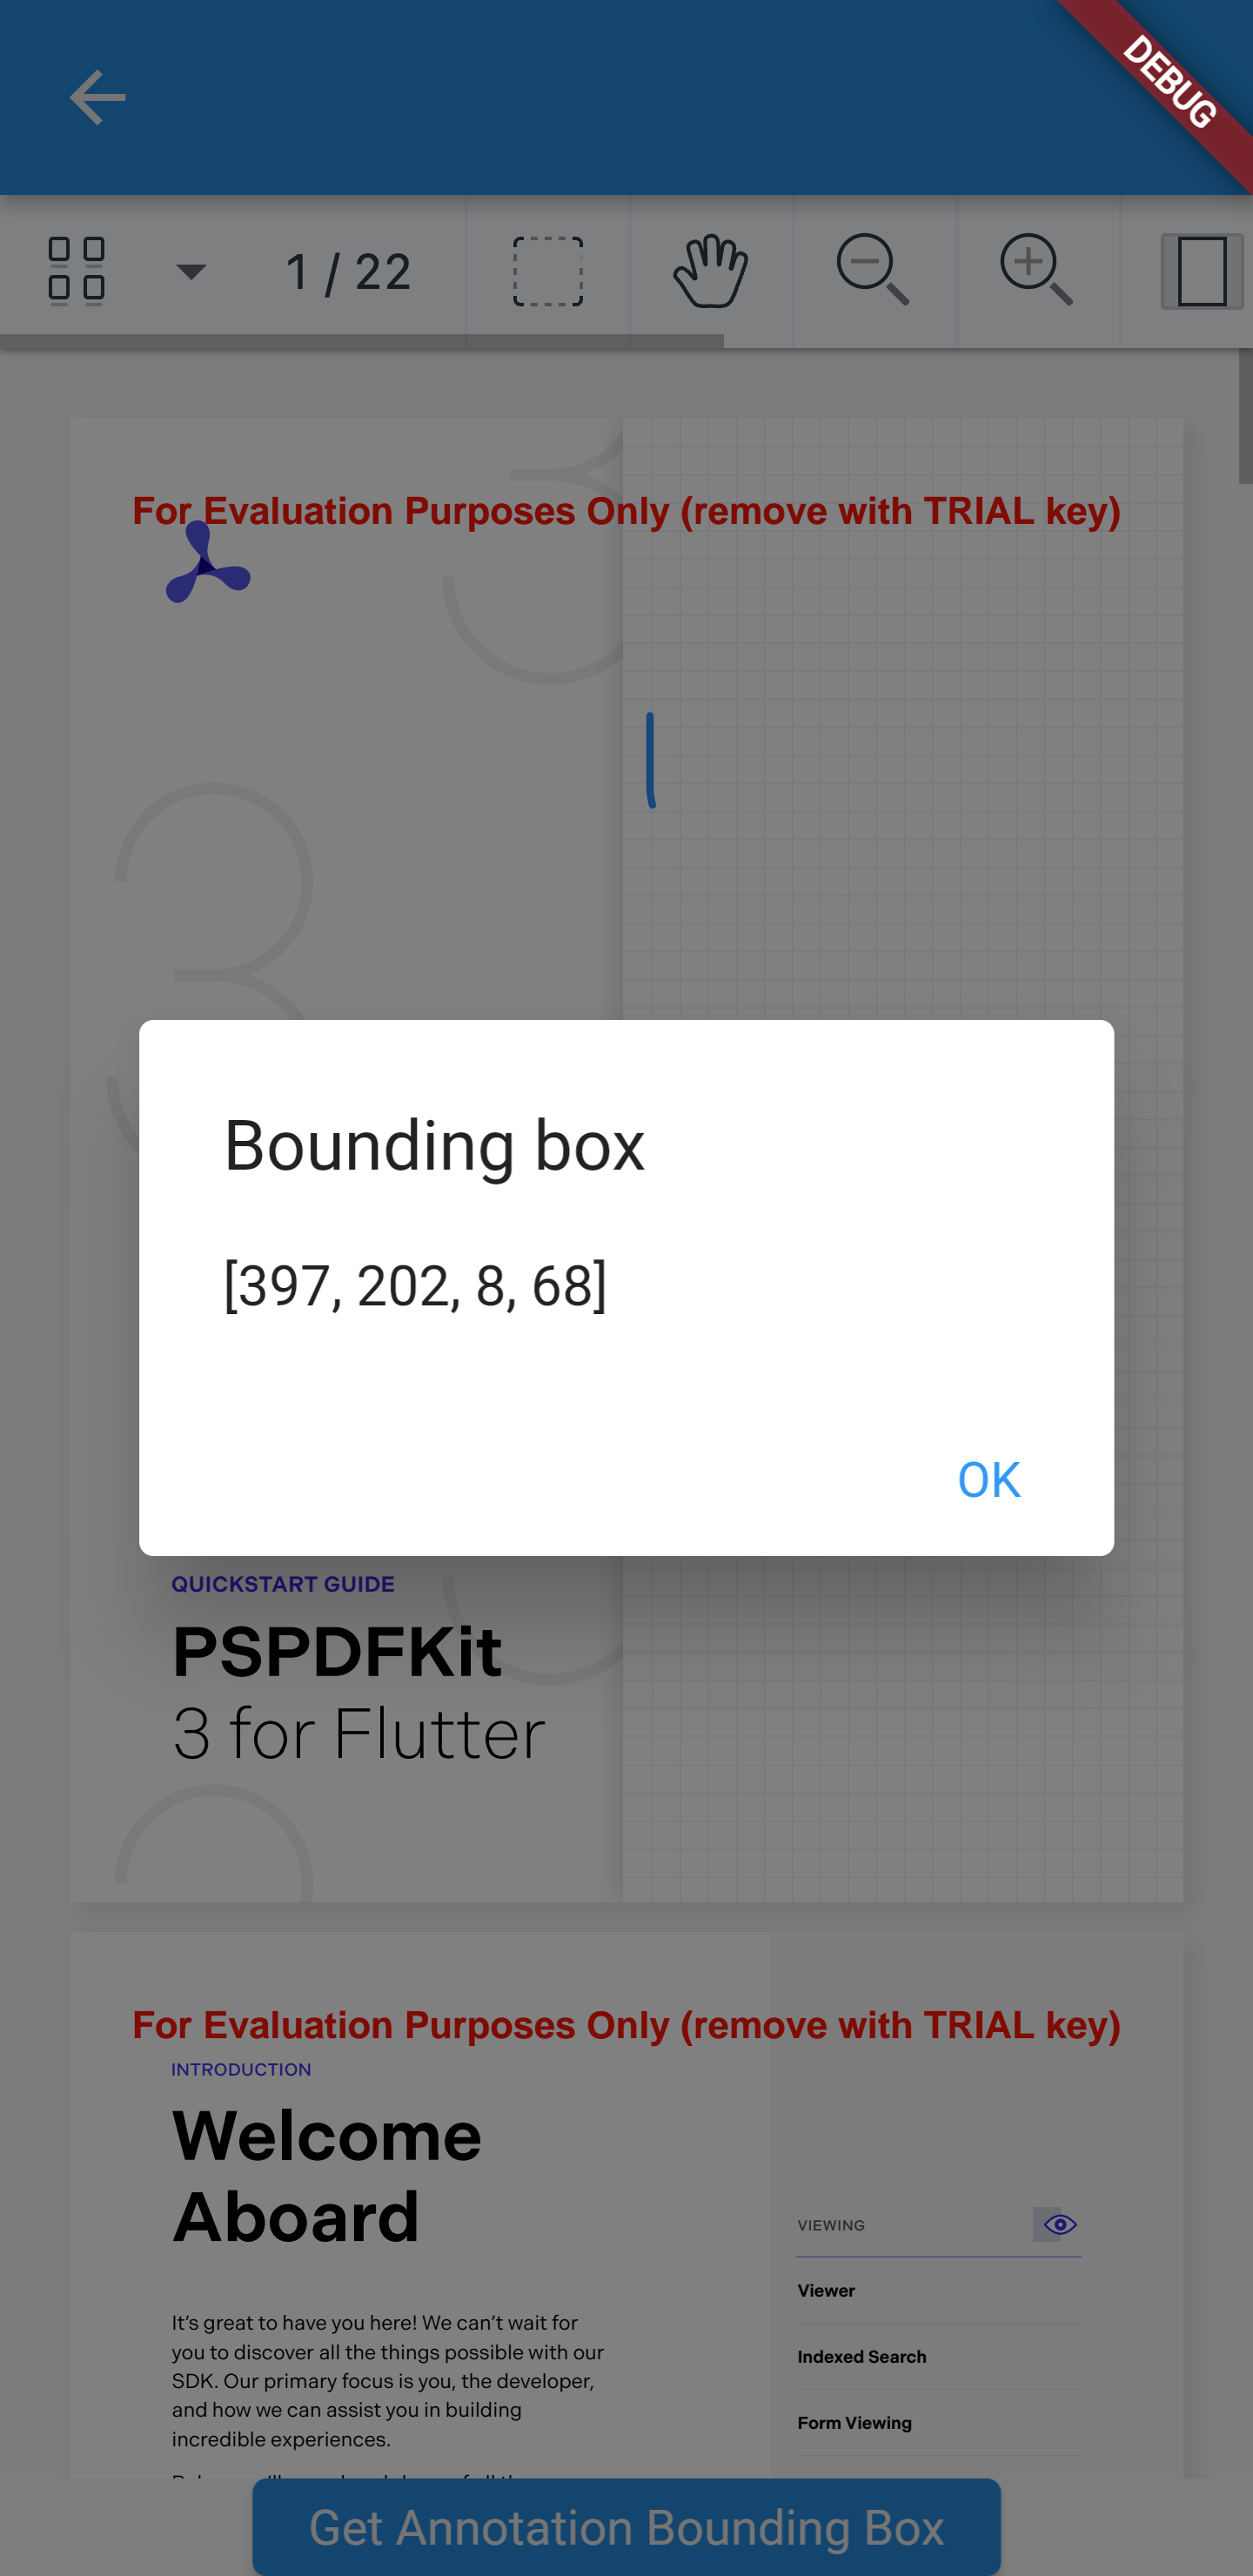 Bounding box alert